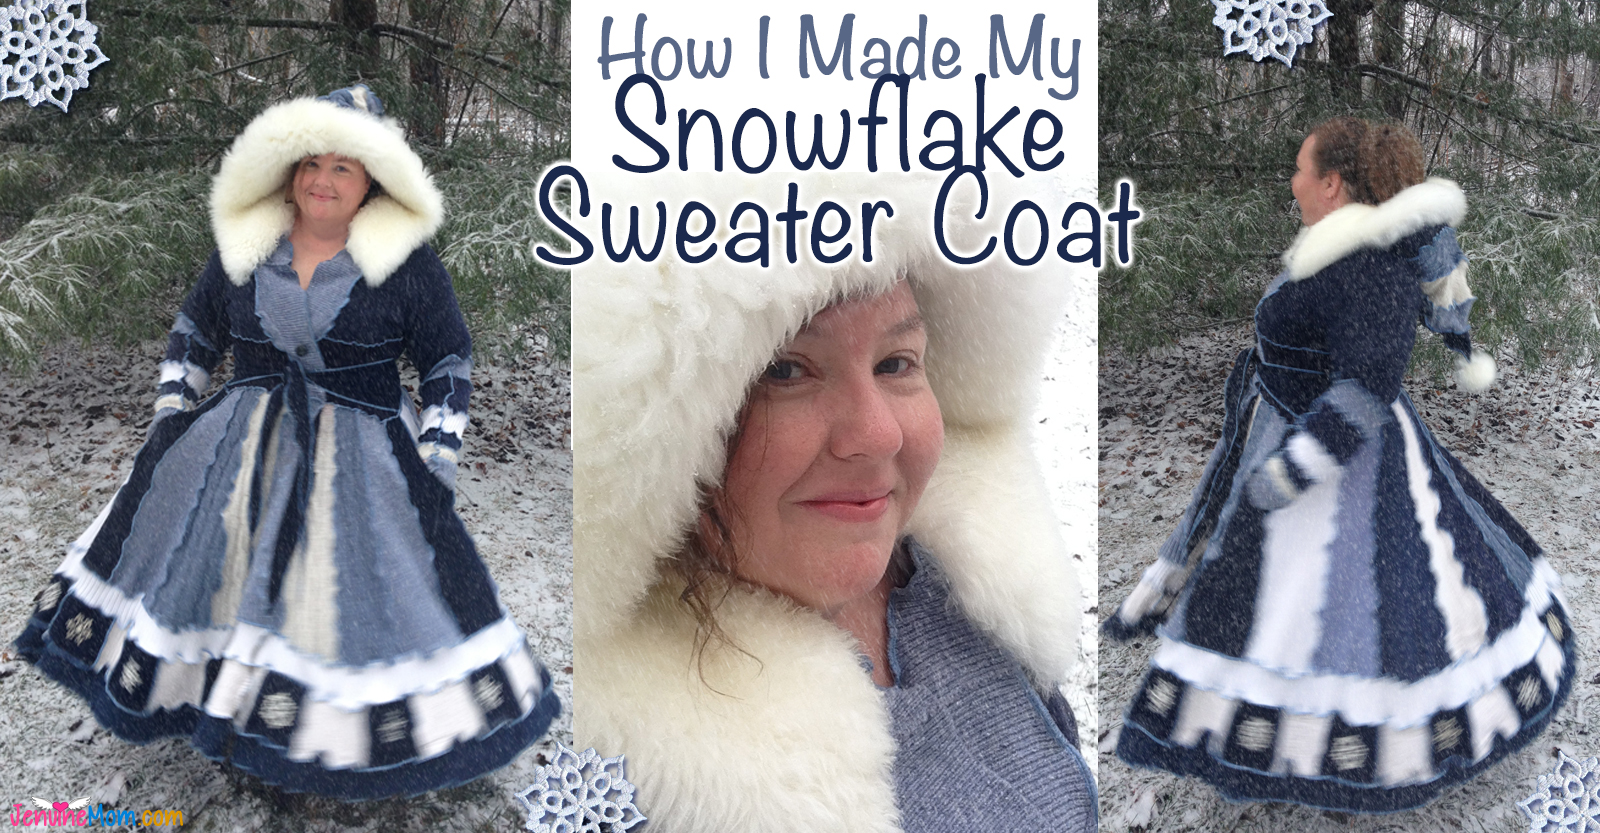 snowflake-sweater-coat-title2